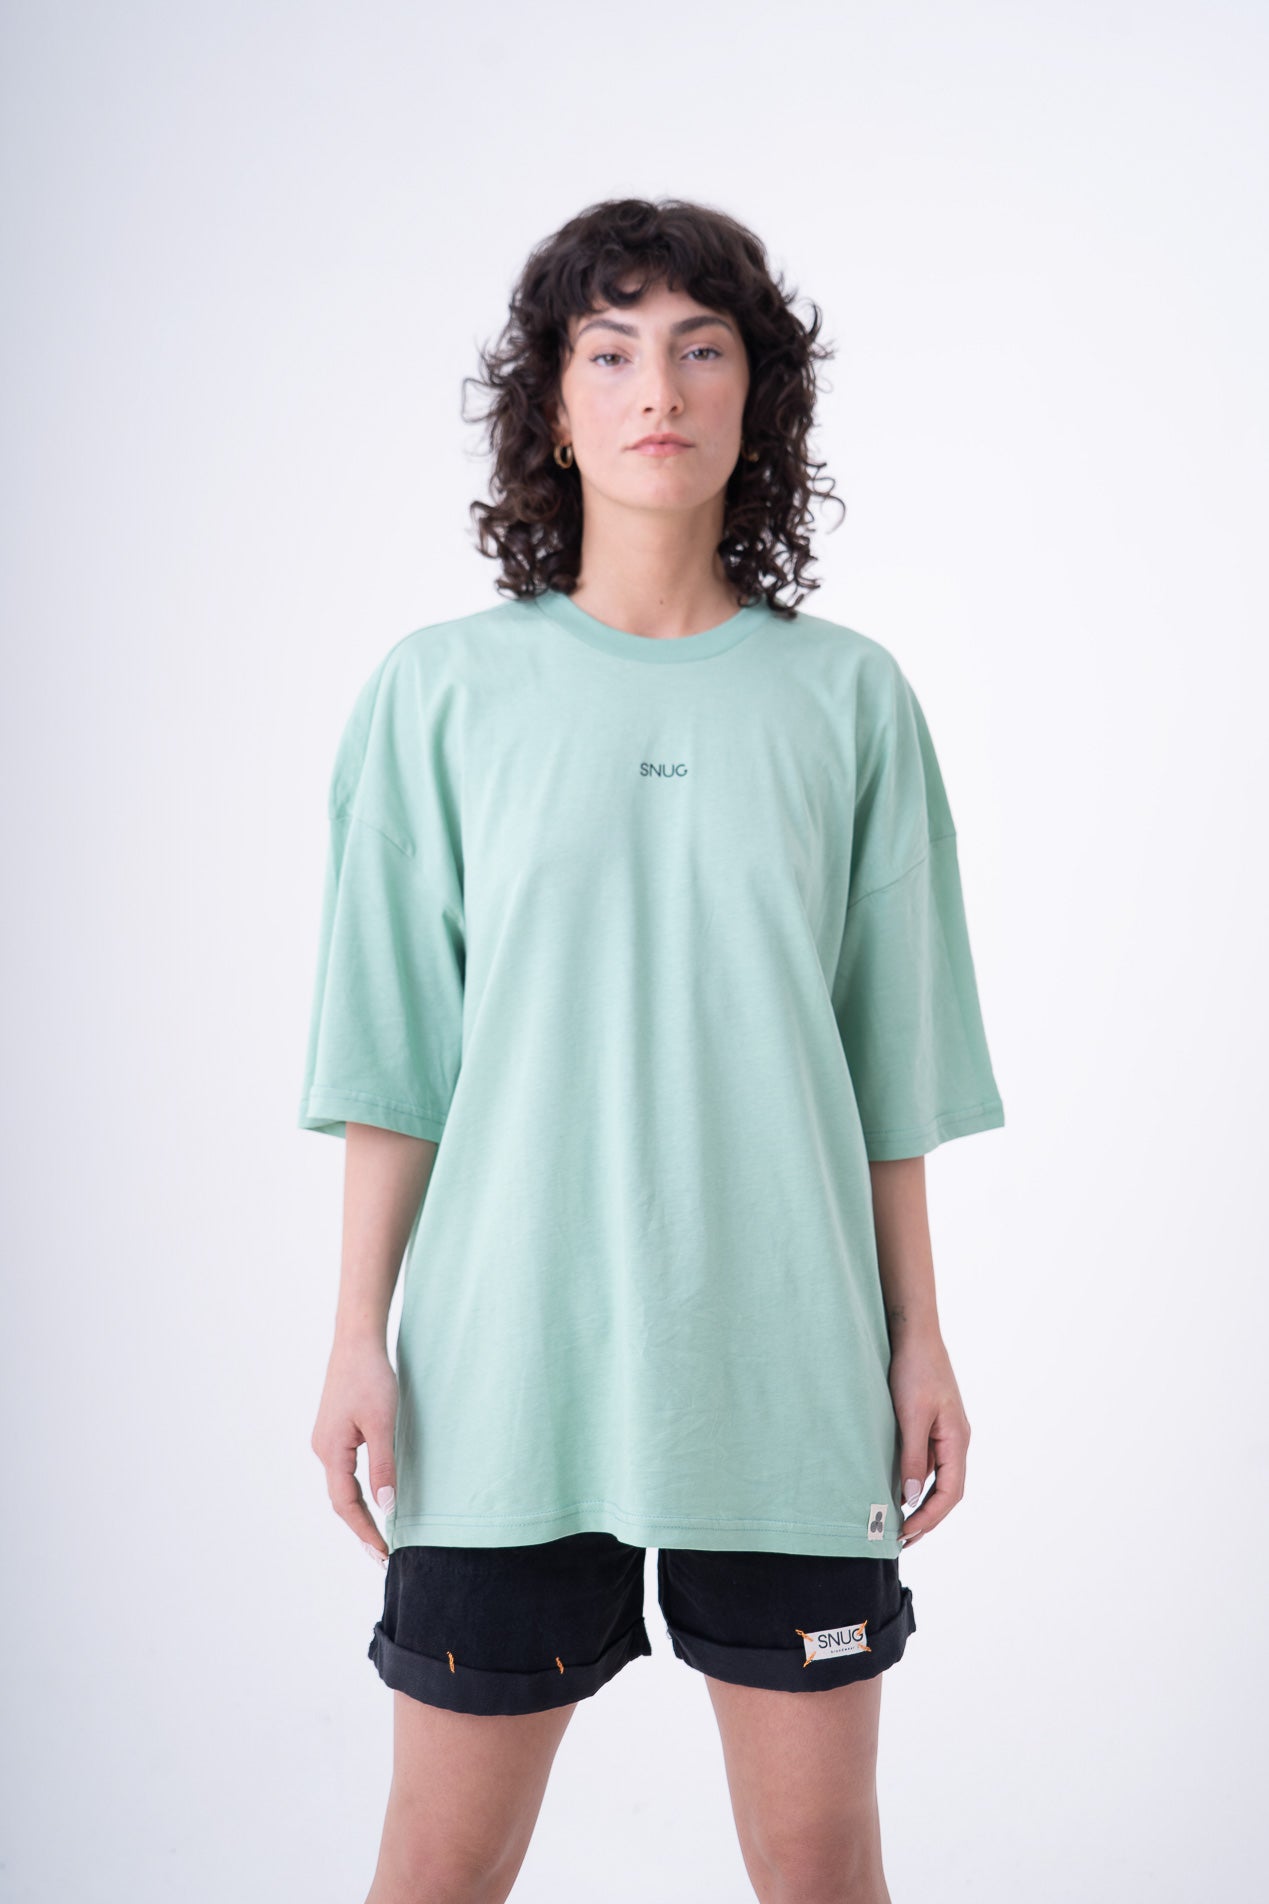 Mint Premium Oversize T-Shirt